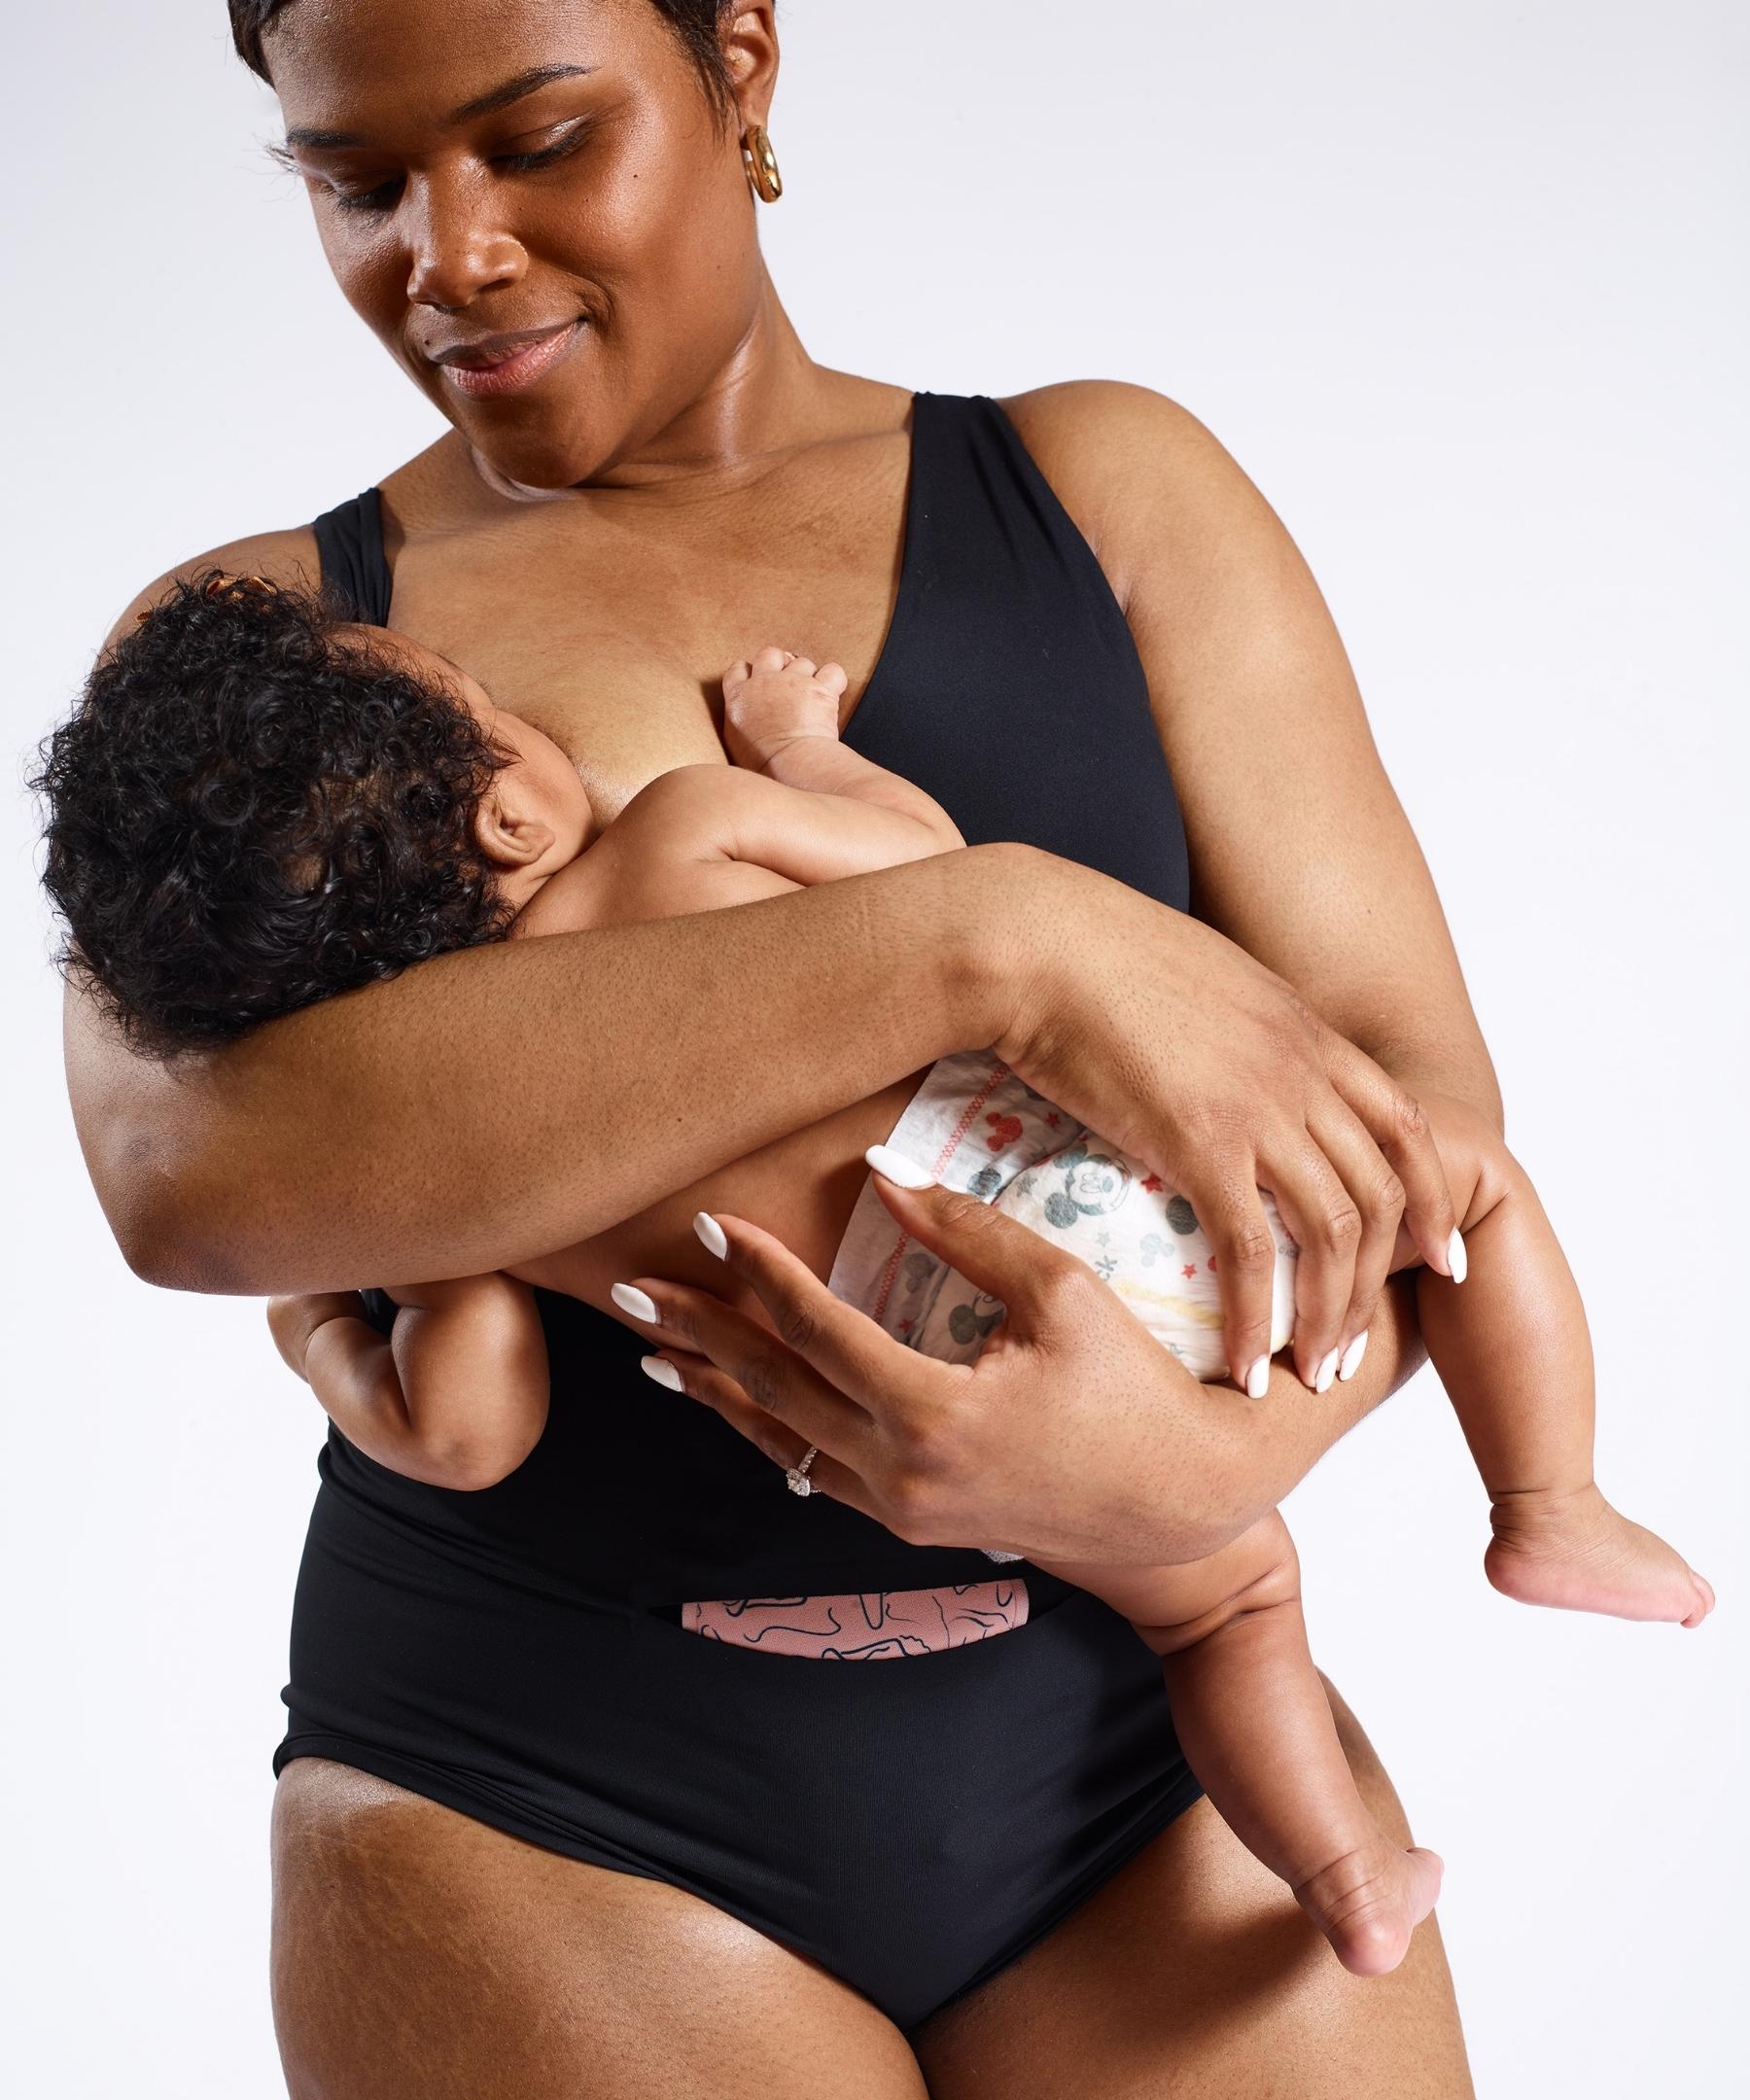 AKARANA BABY Laser-Cut Basic Nursing Sleep & Yoga Bra For Breastfeeding  Women Button Front Maternity Comfy Bralette (Nude) 2024, Buy AKARANA BABY  Online